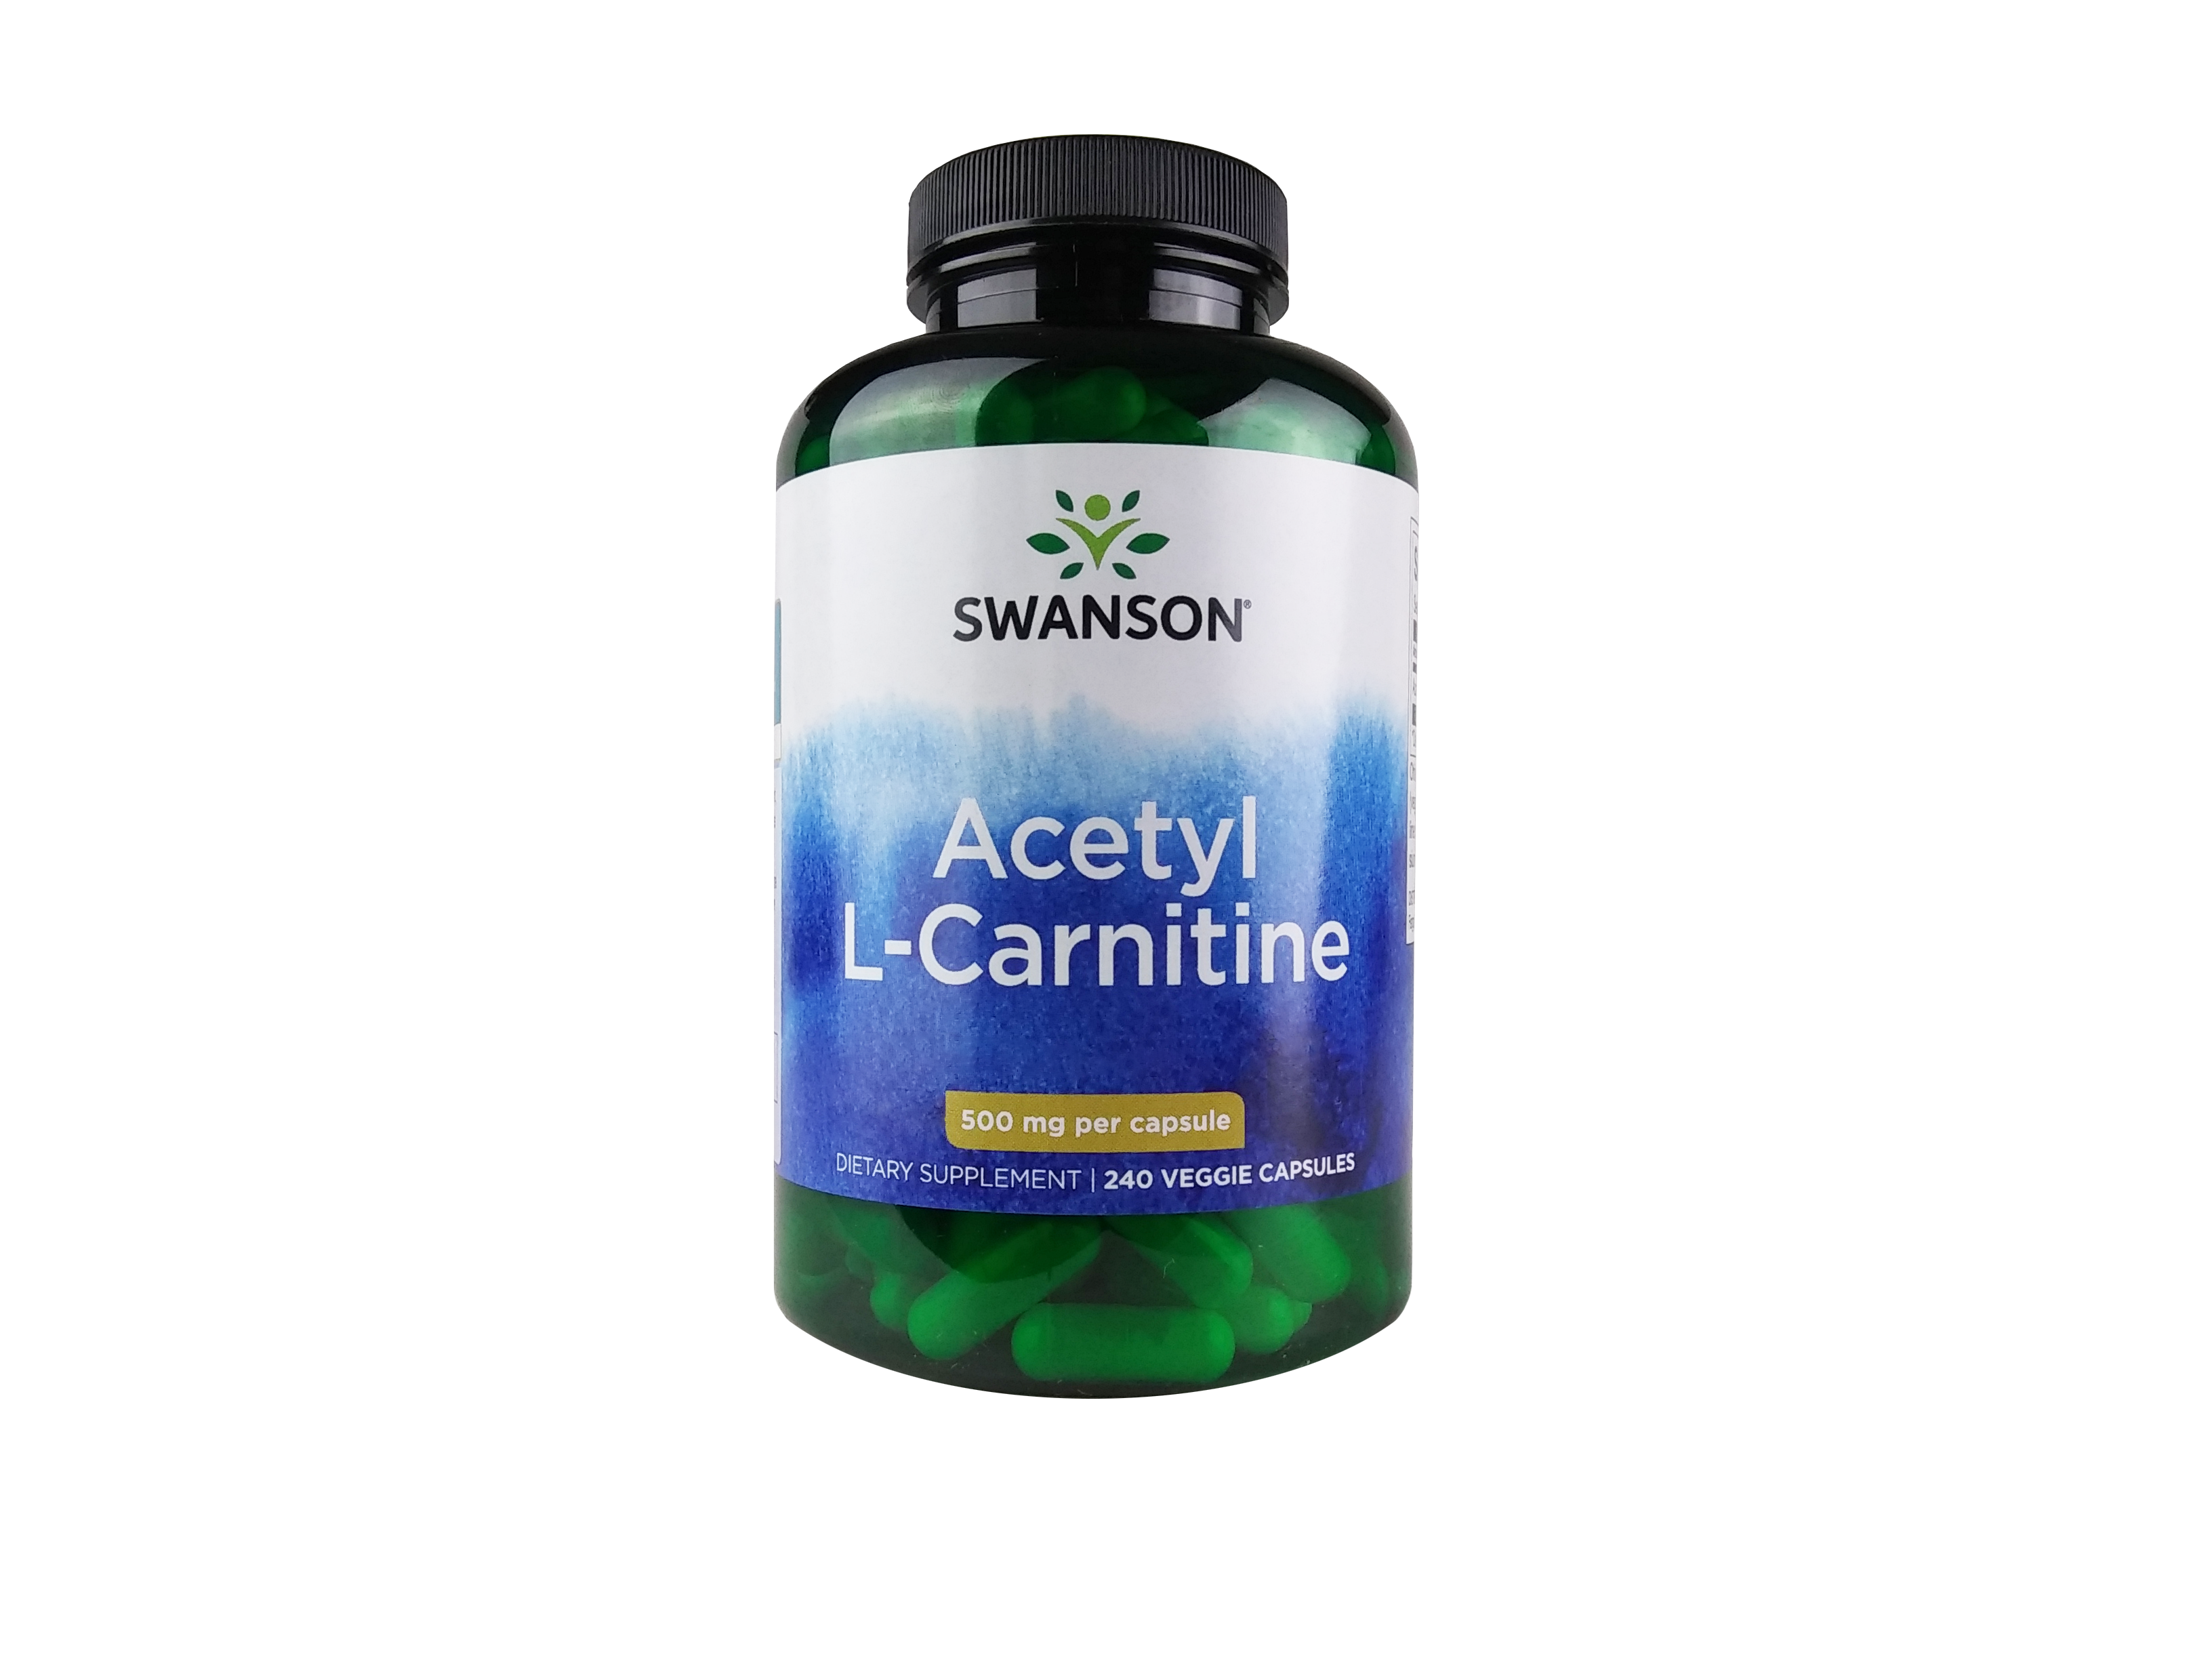 Swanson Premium Acetyl L-Carnitine Supplement Vitamin | 500 mg | 240 Veg Caps